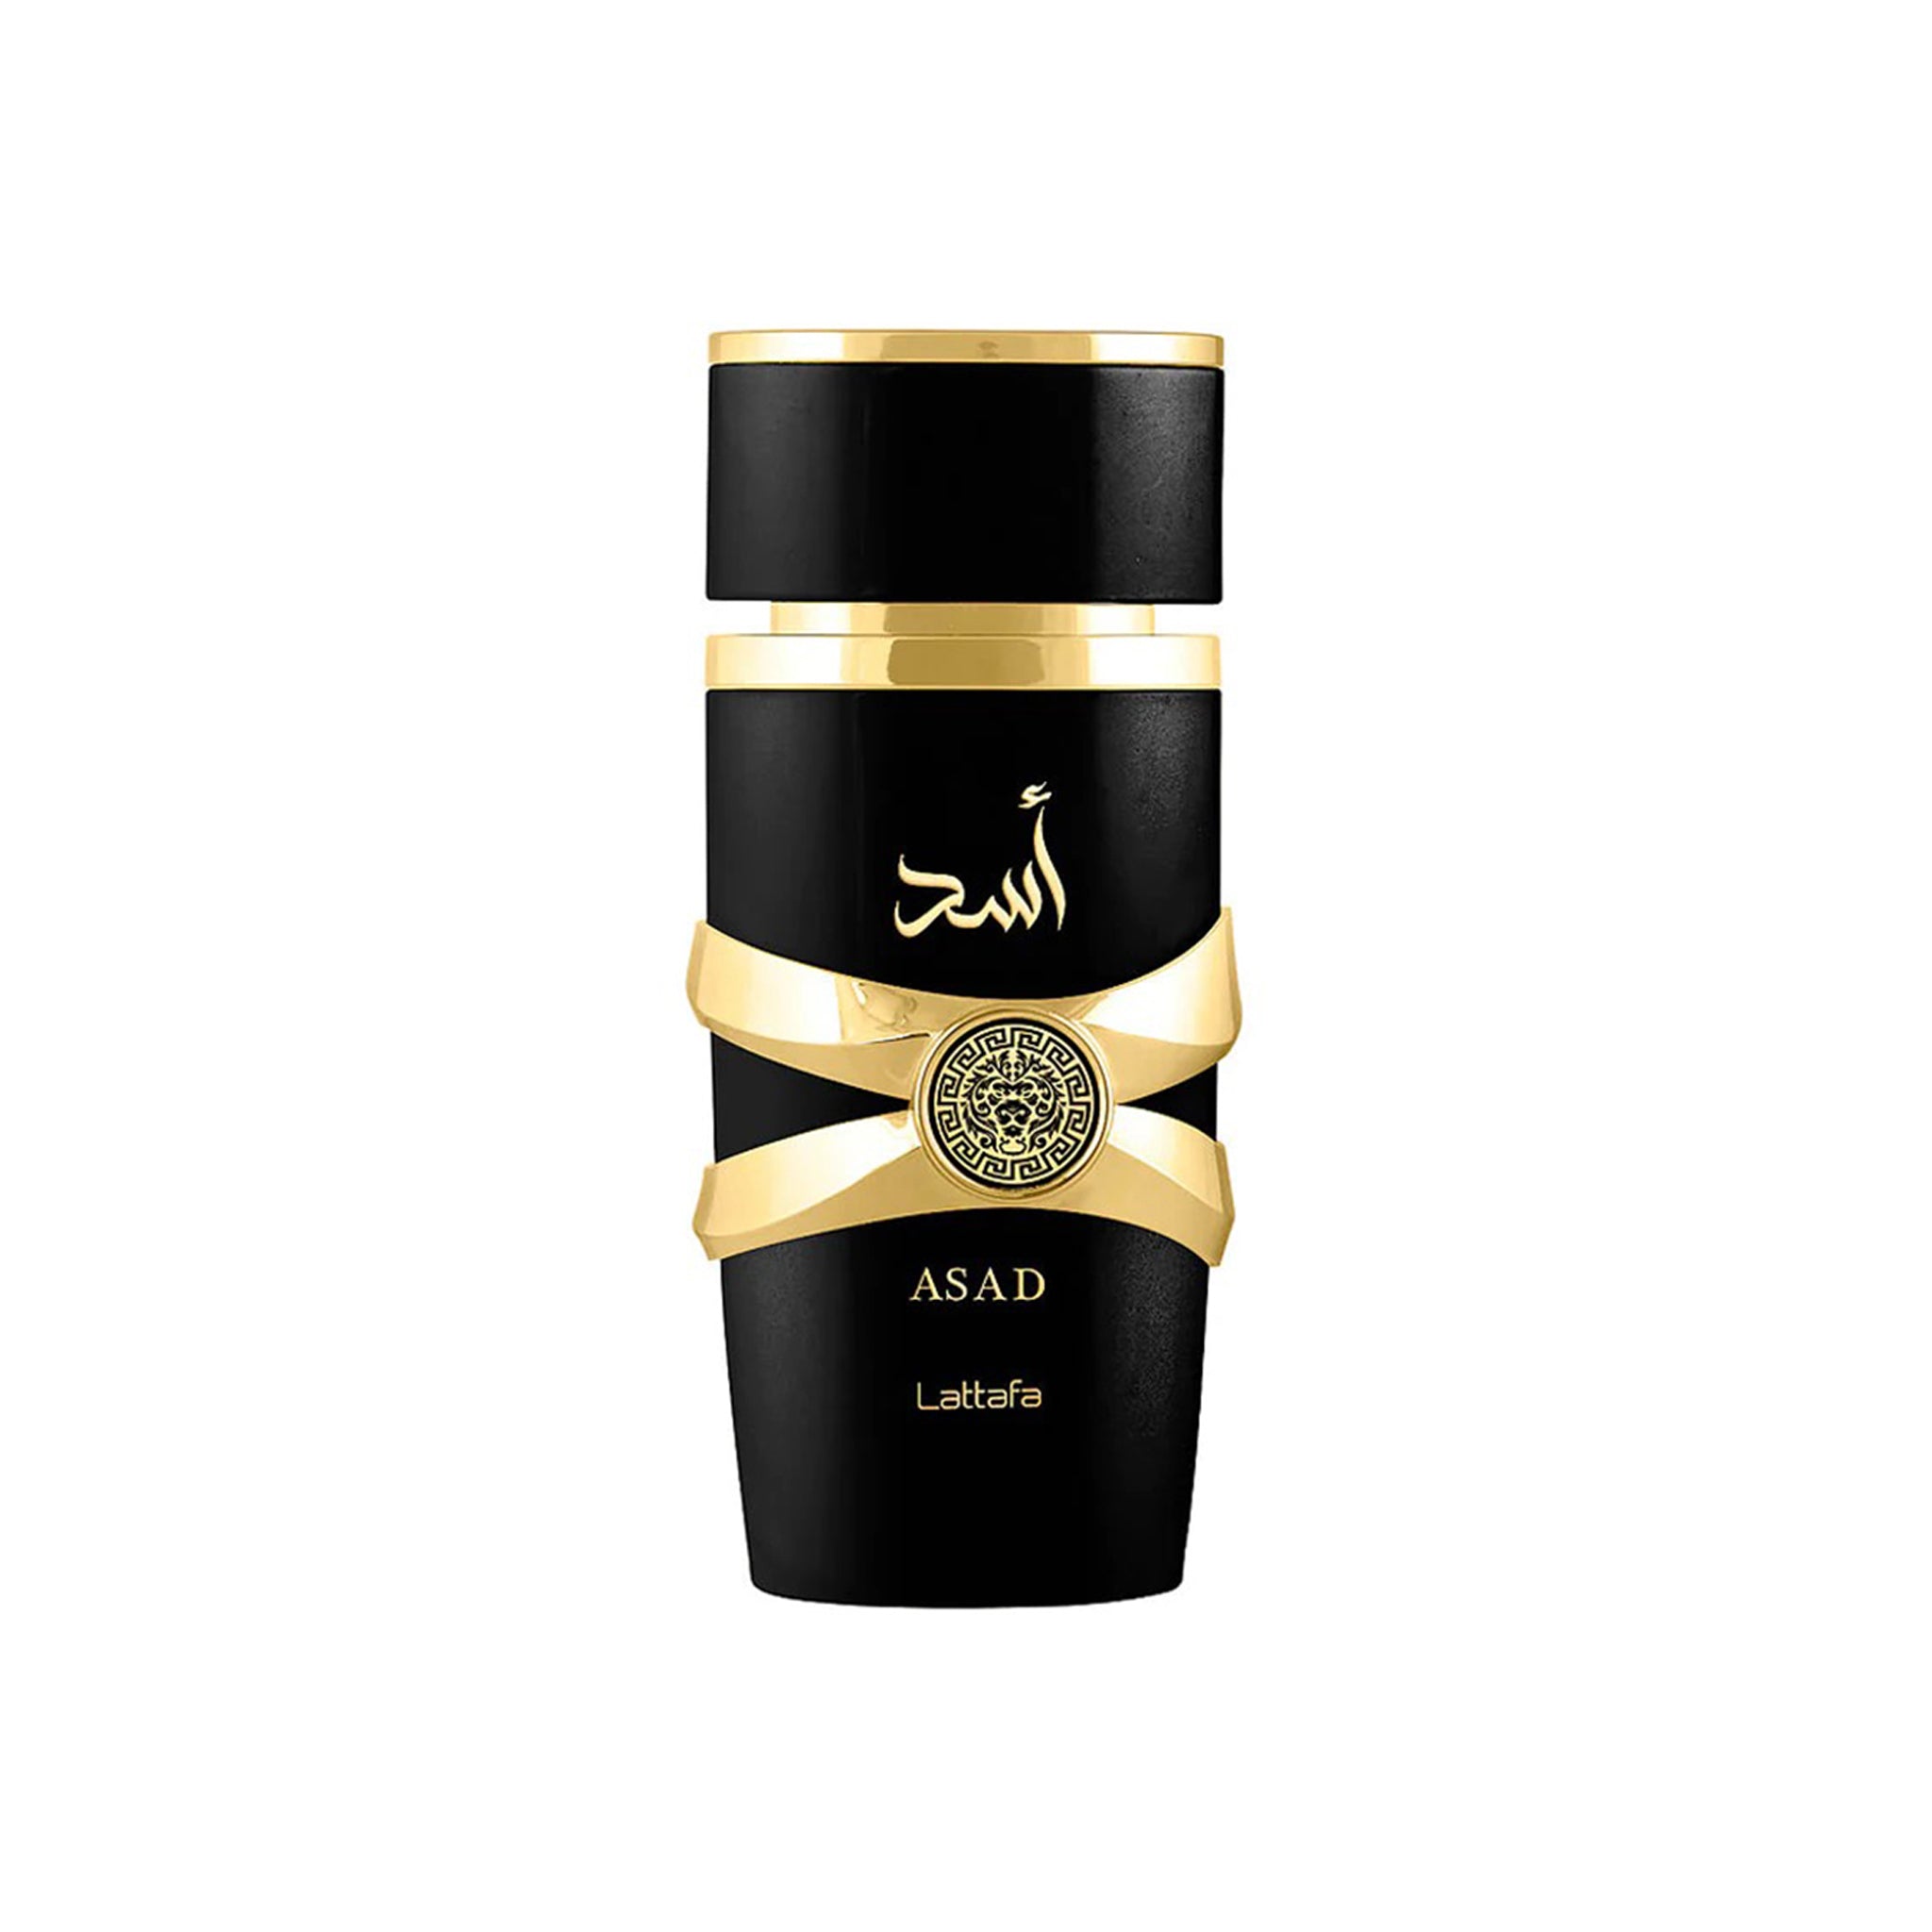 Asad Eau De Parfum 100ml by Lattafa